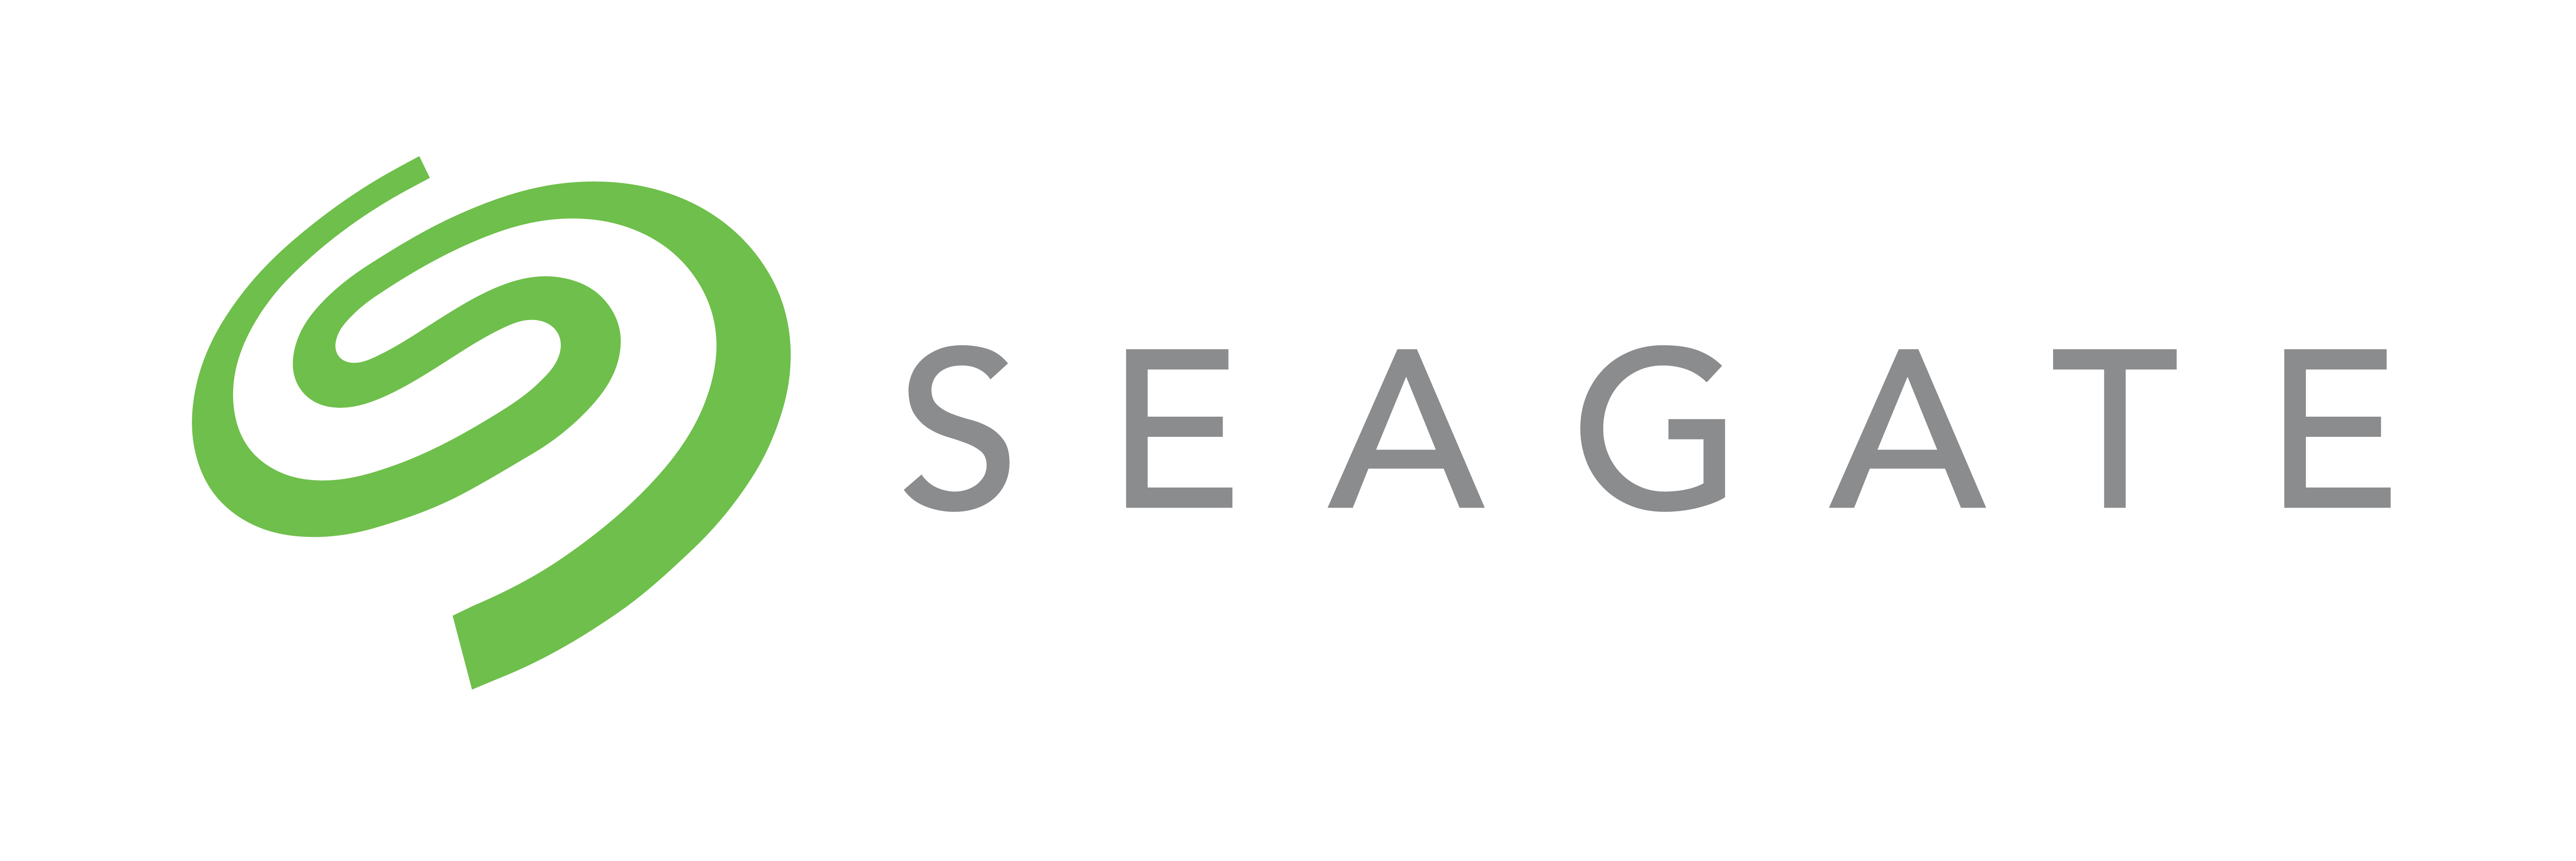 C3 Customer - Seagate